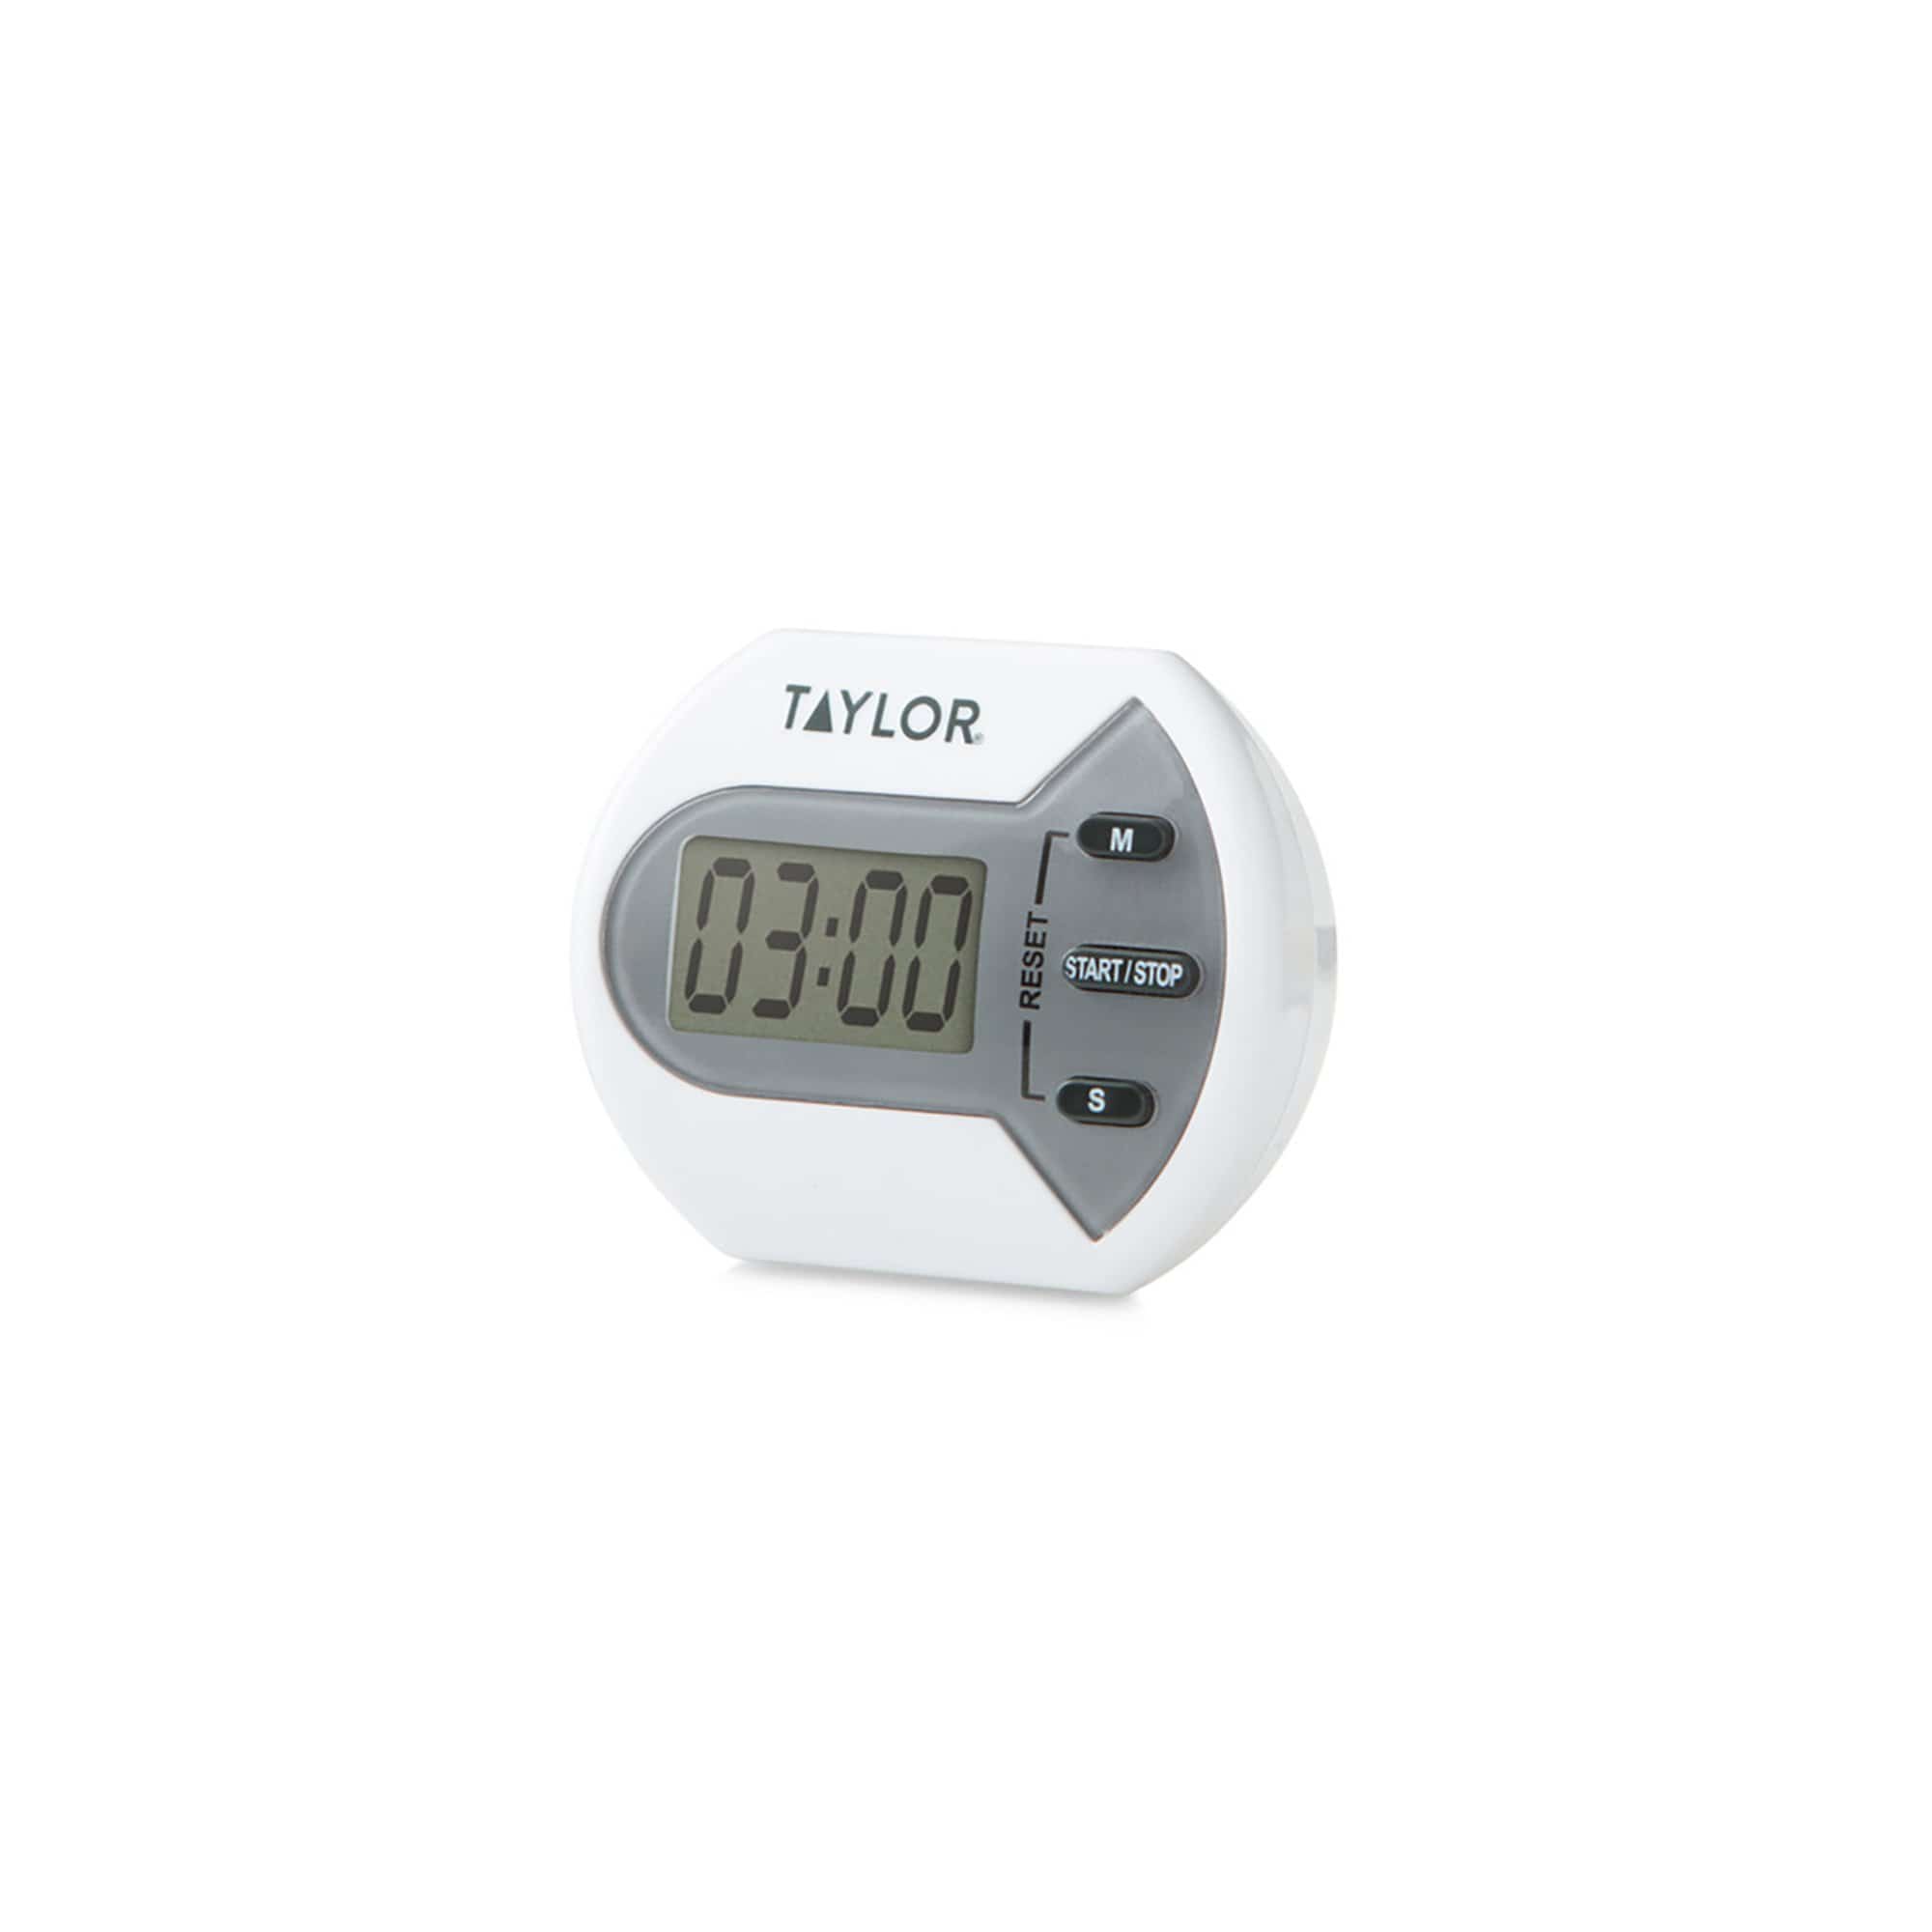 Taylor Multi-Purpose Digital Magnetic Timer, 1 ct - Kroger